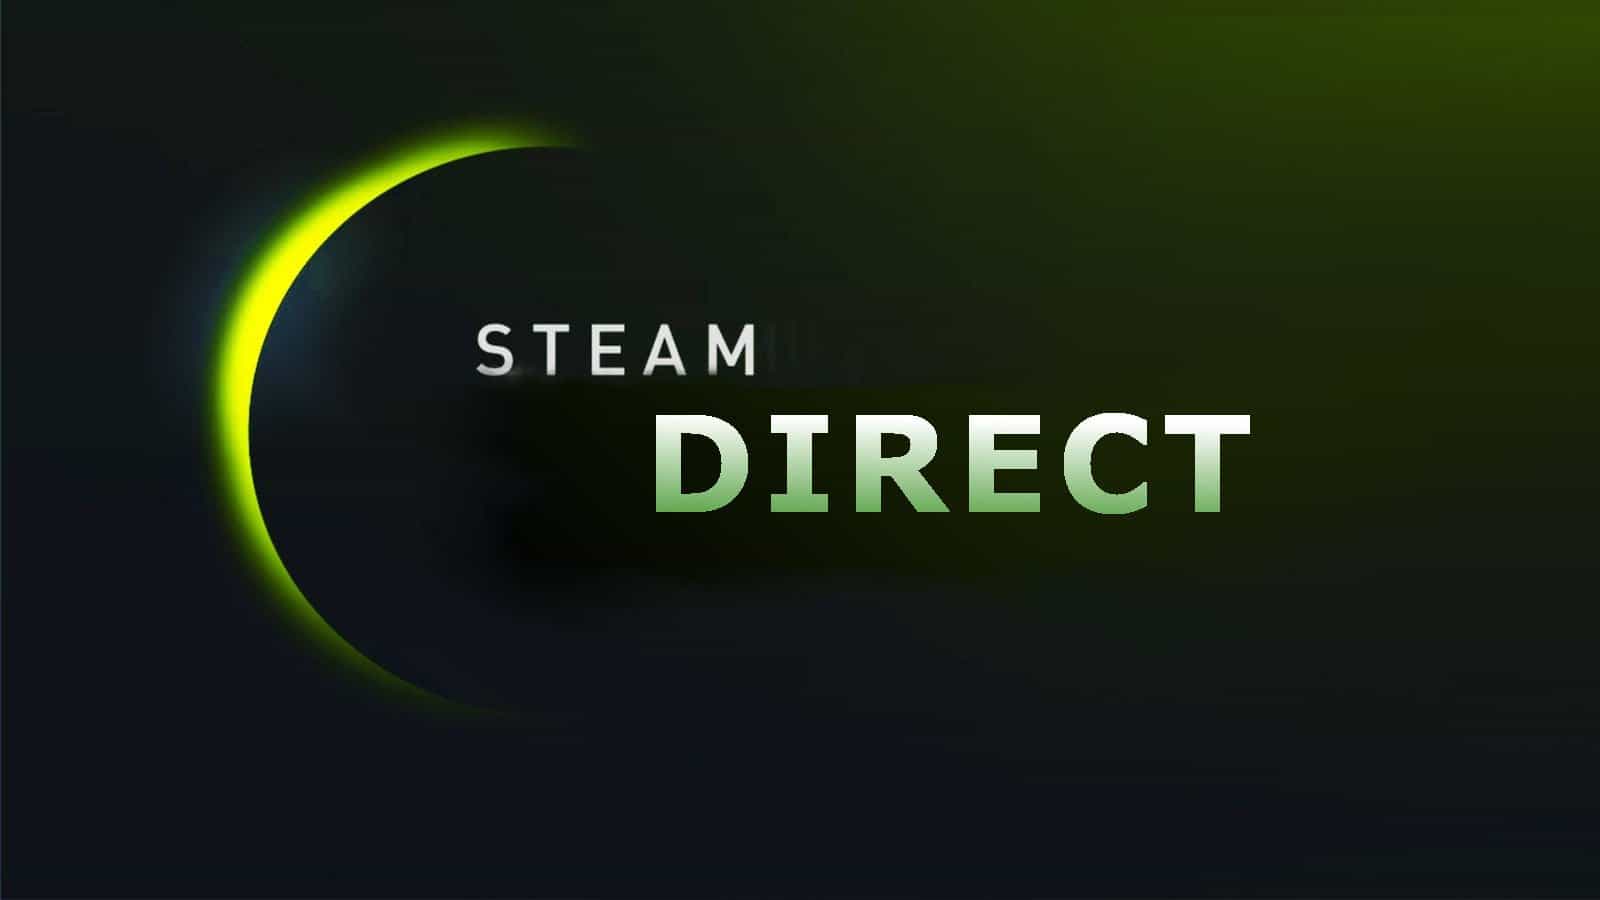 Steam Direct เปิดให้บริการ !! ใครอยากเปิดเกมเรียนเชิญ